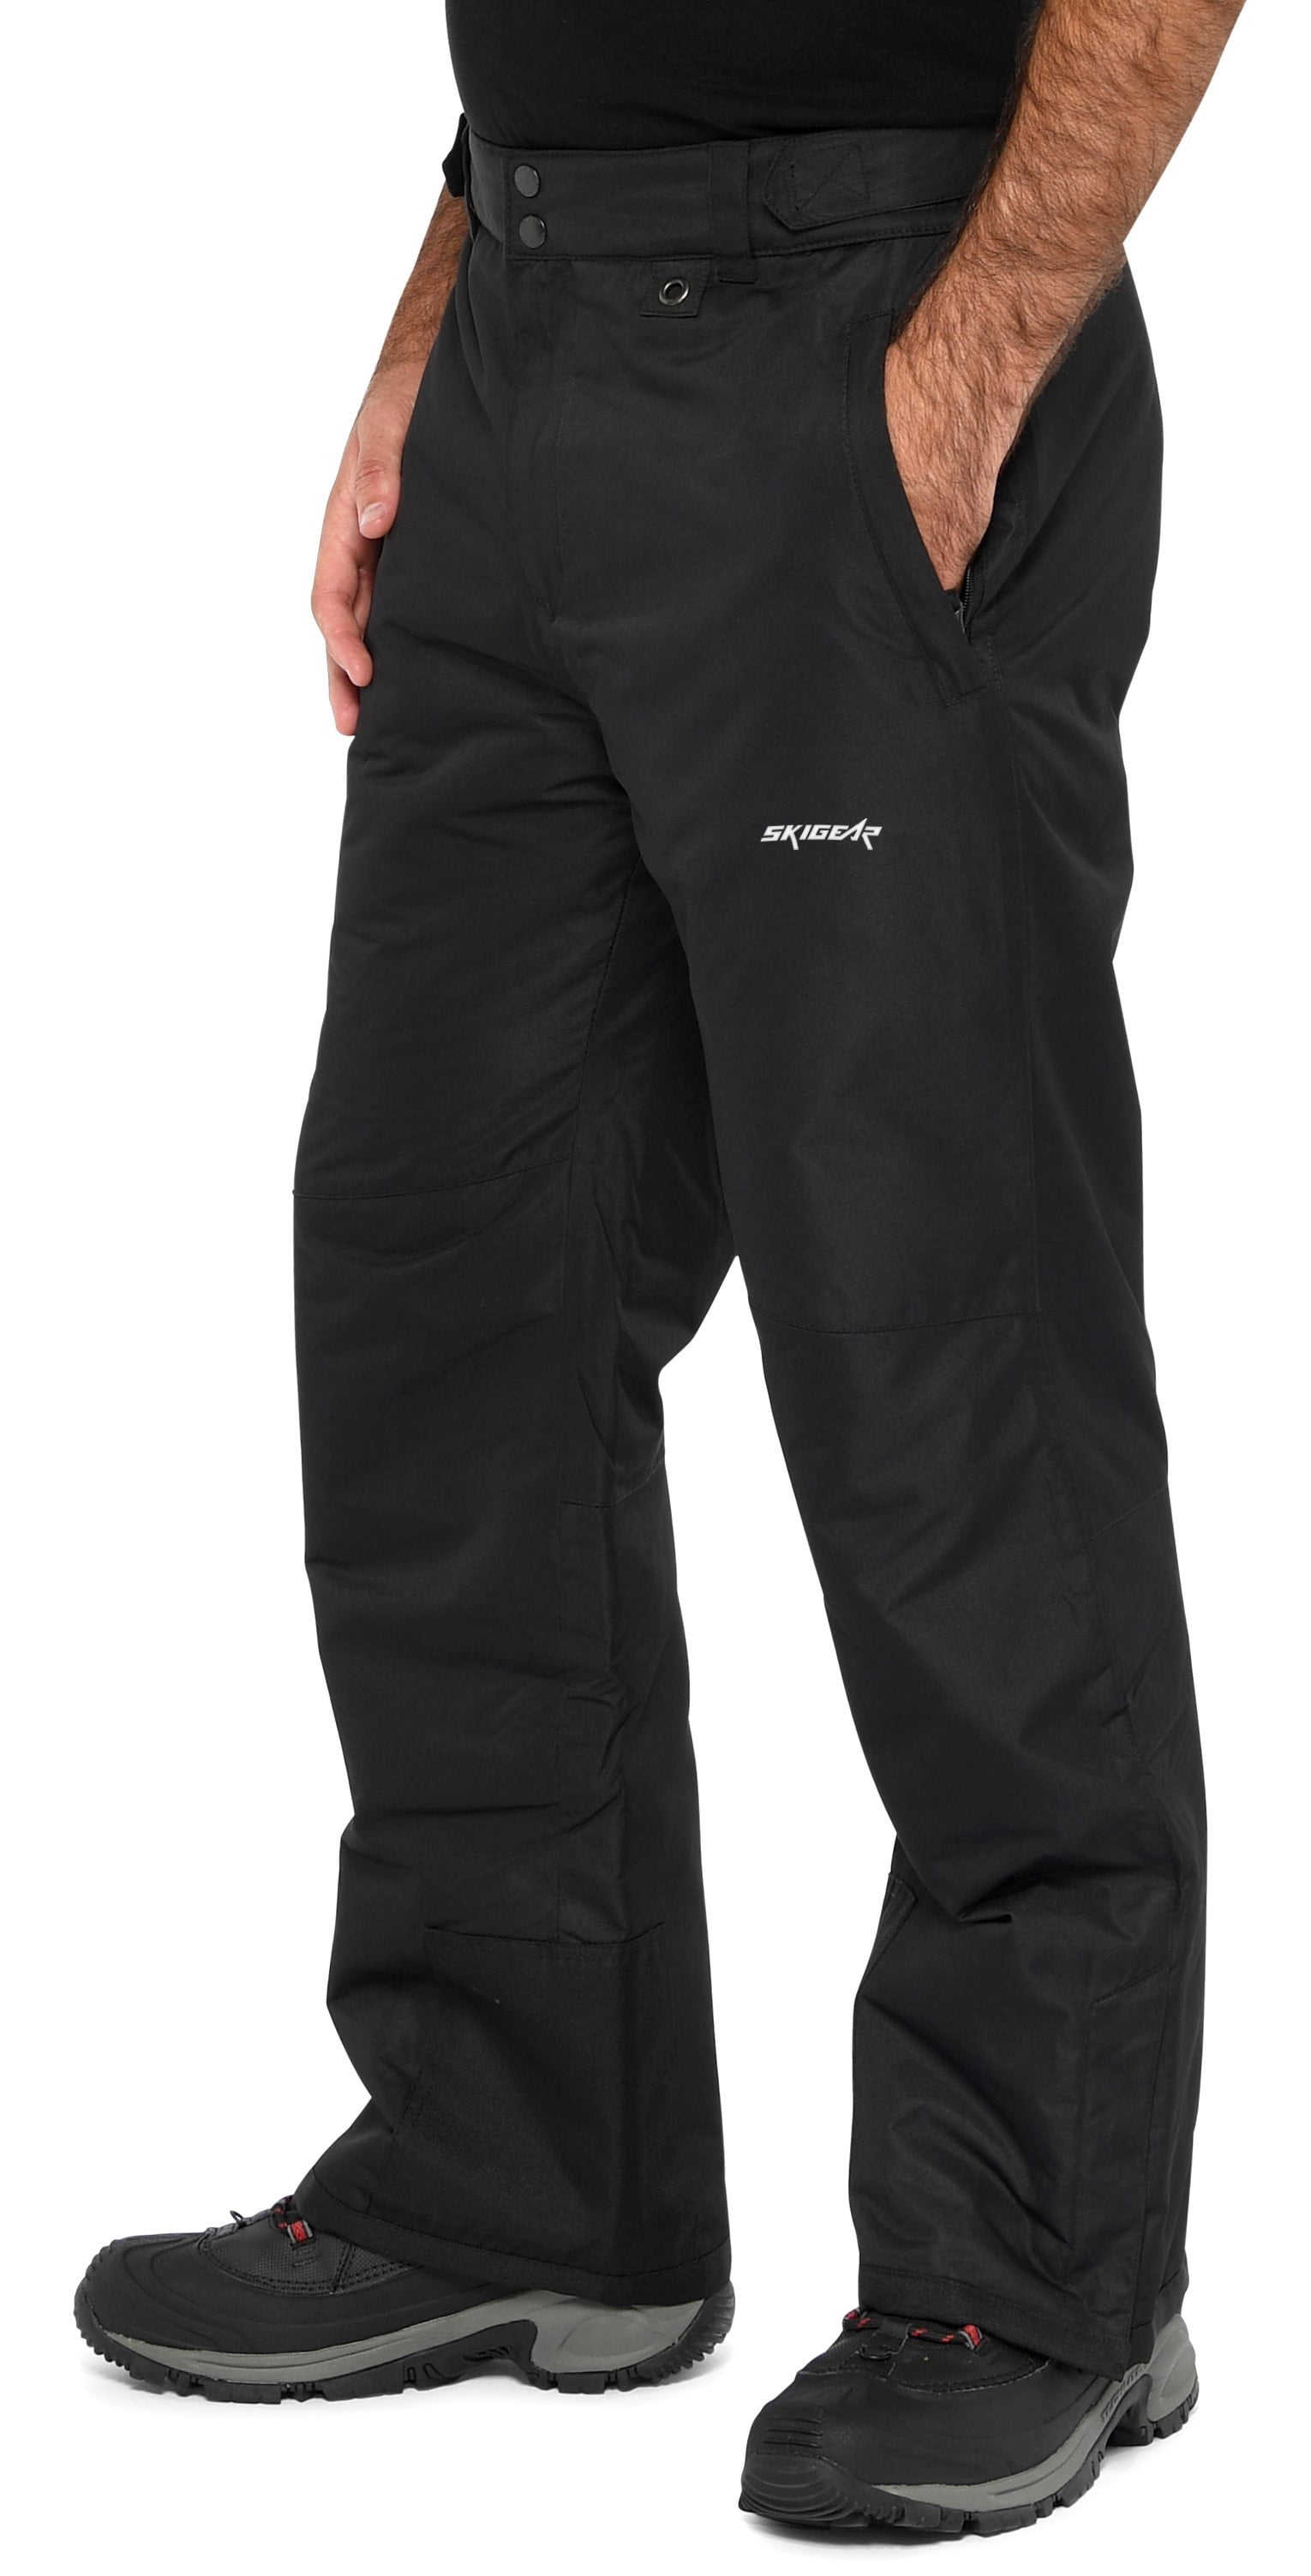 SkiGear Men's Essential Snow Pants